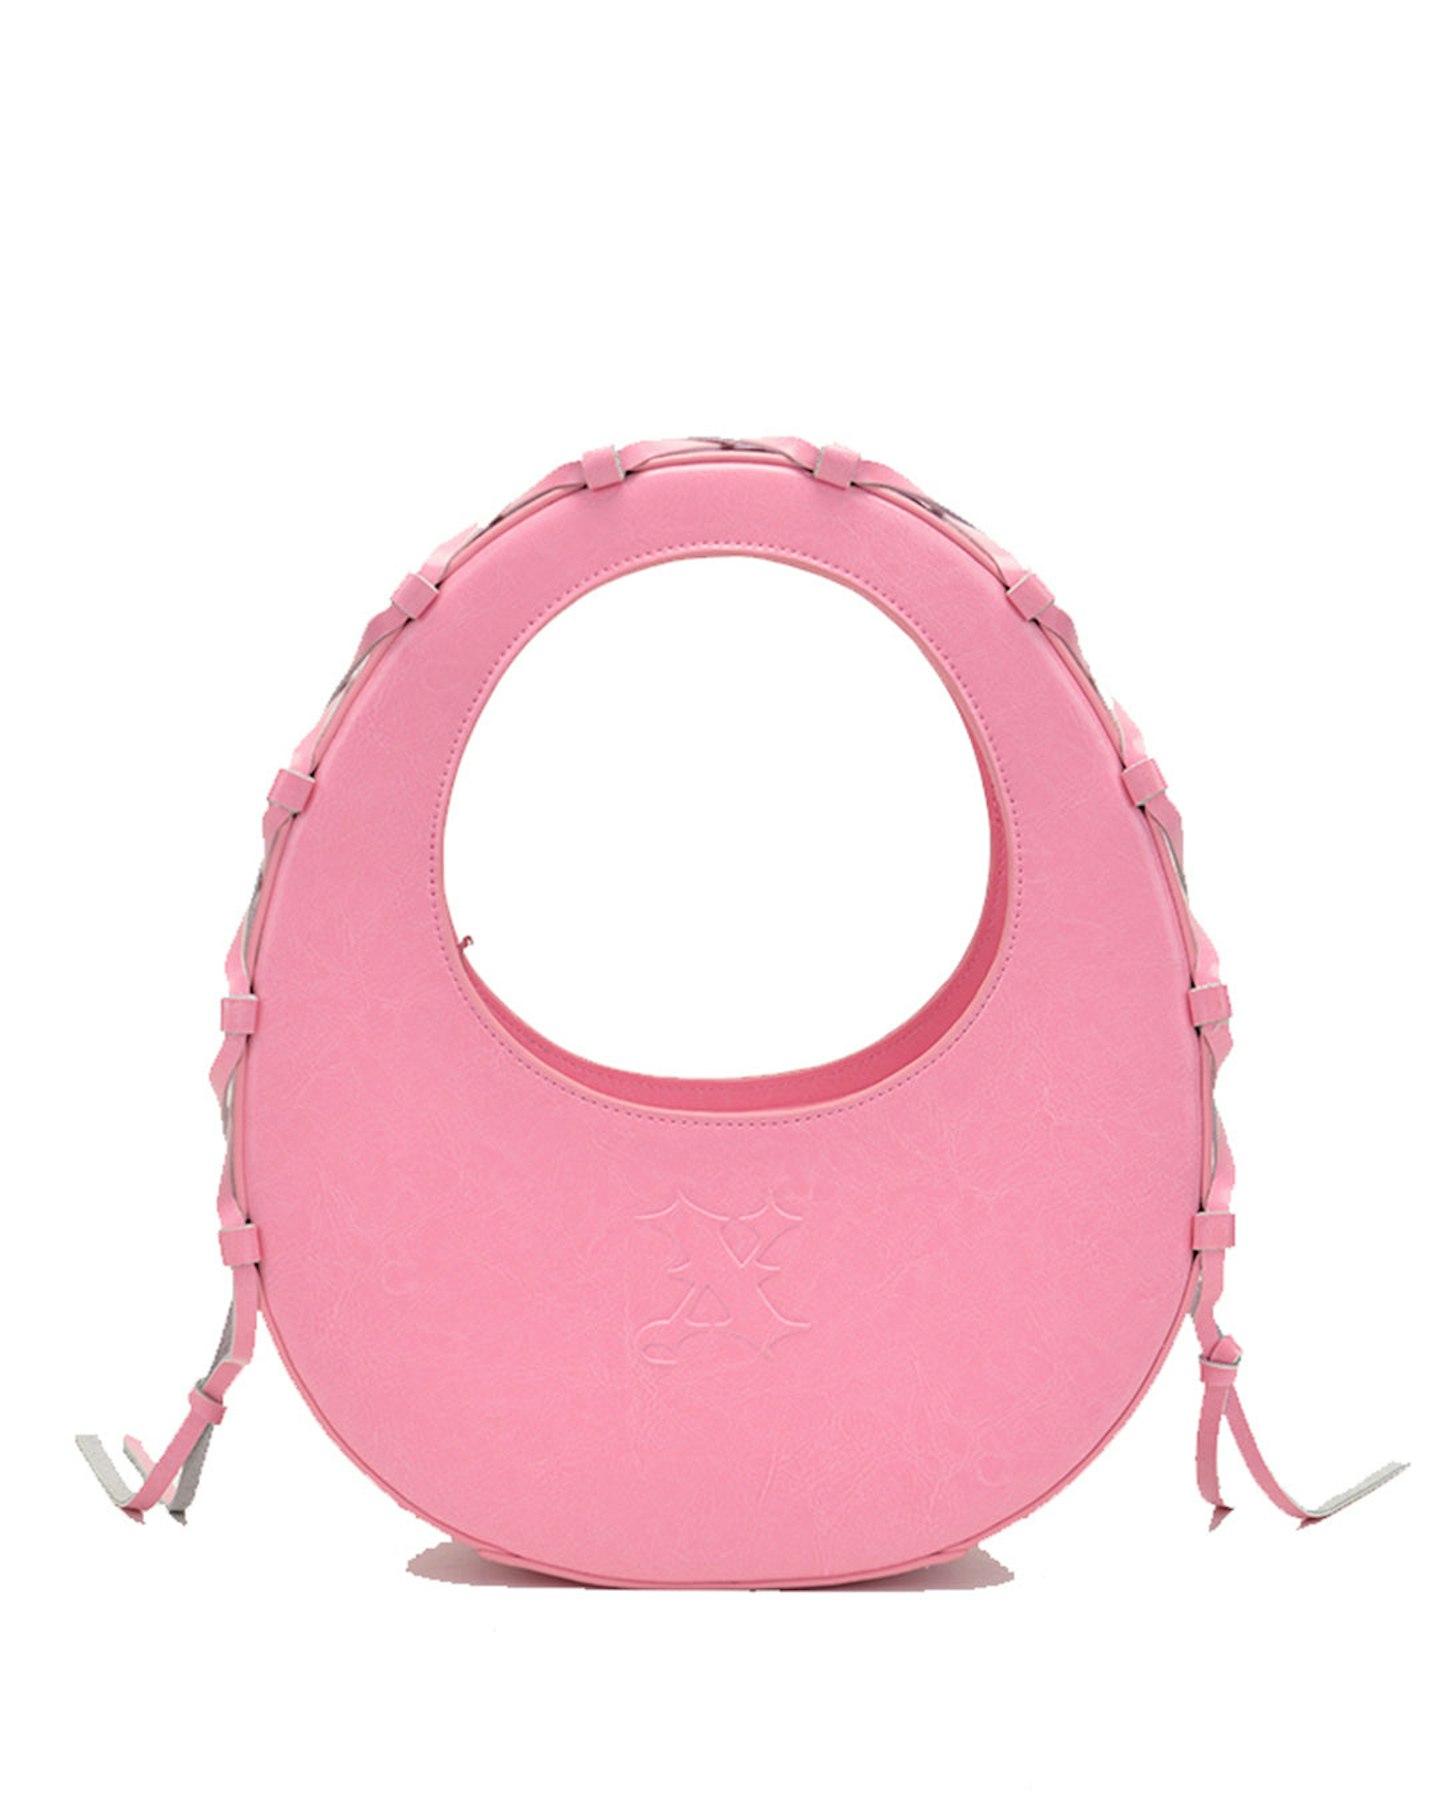 Parallel X Studio Lolita Leather Bag Blush Pink